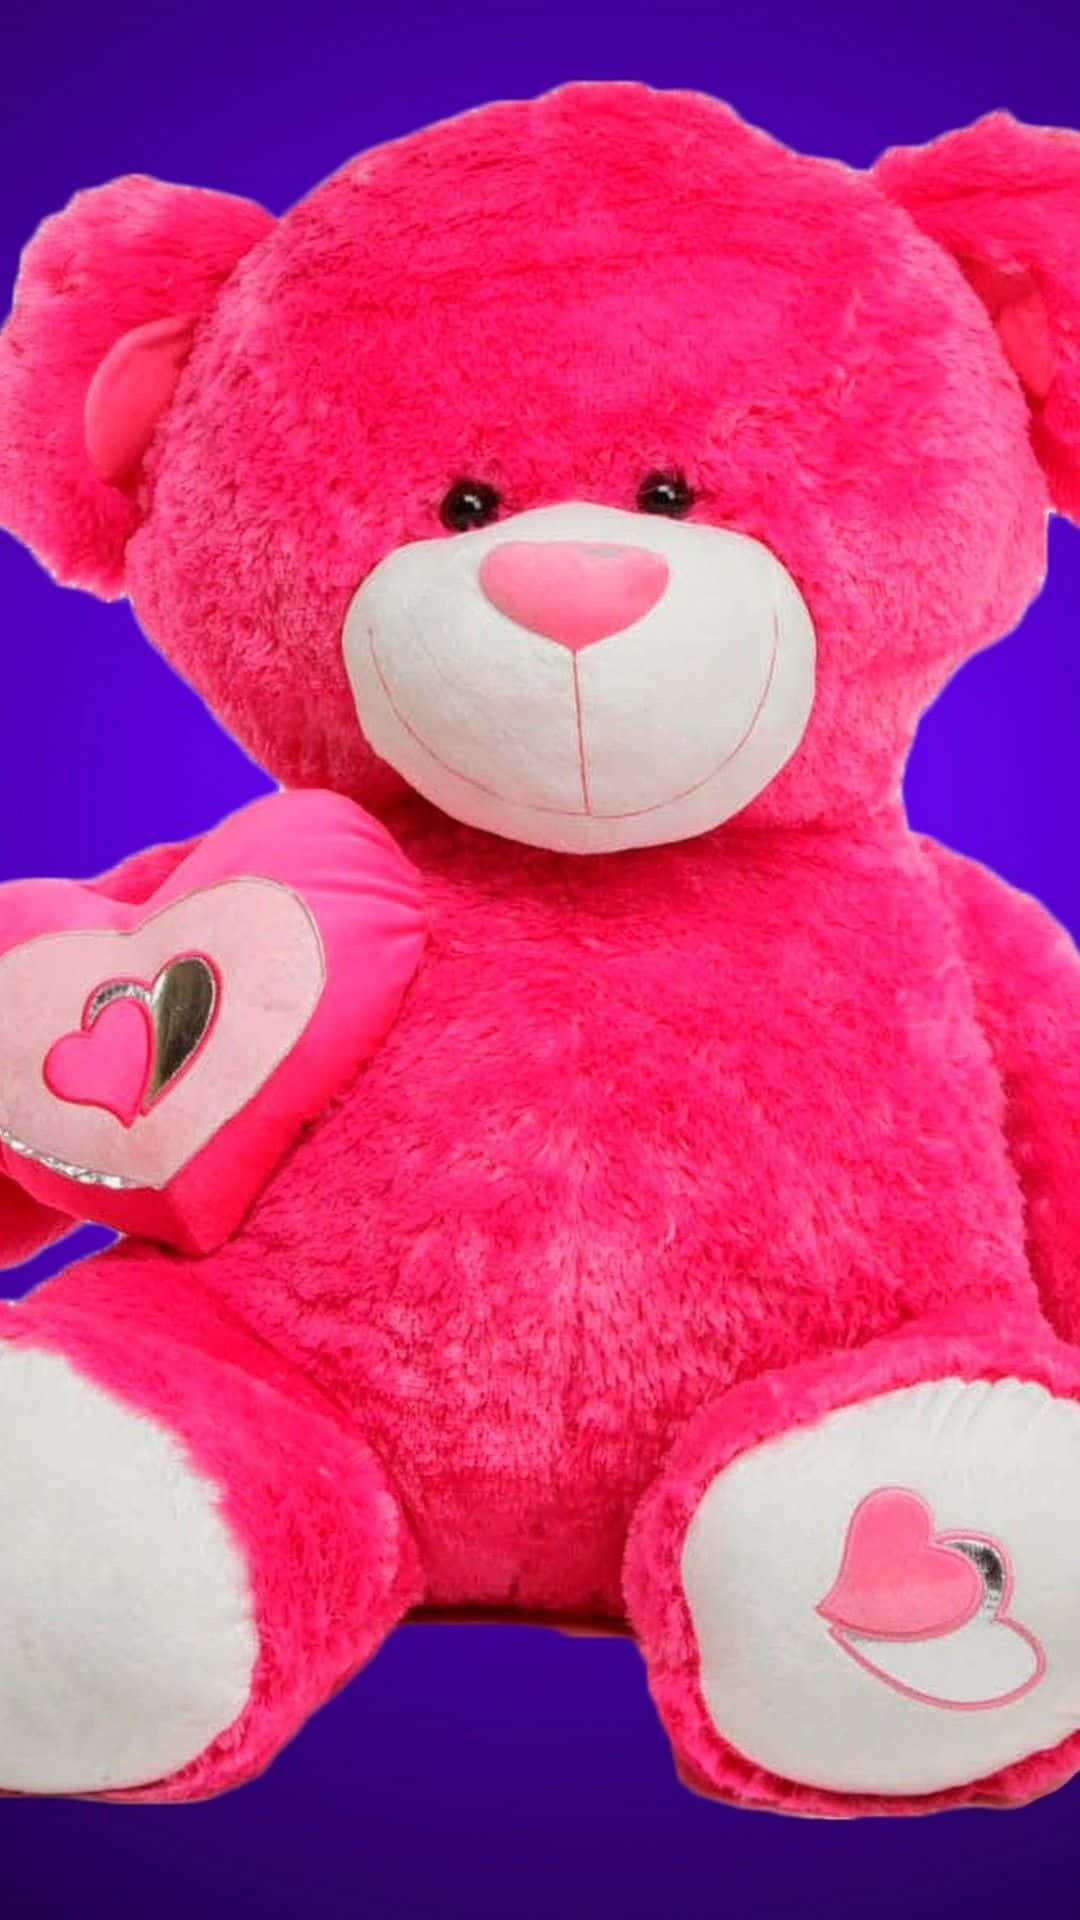 Cute Pink Teddy Bear Heart Background